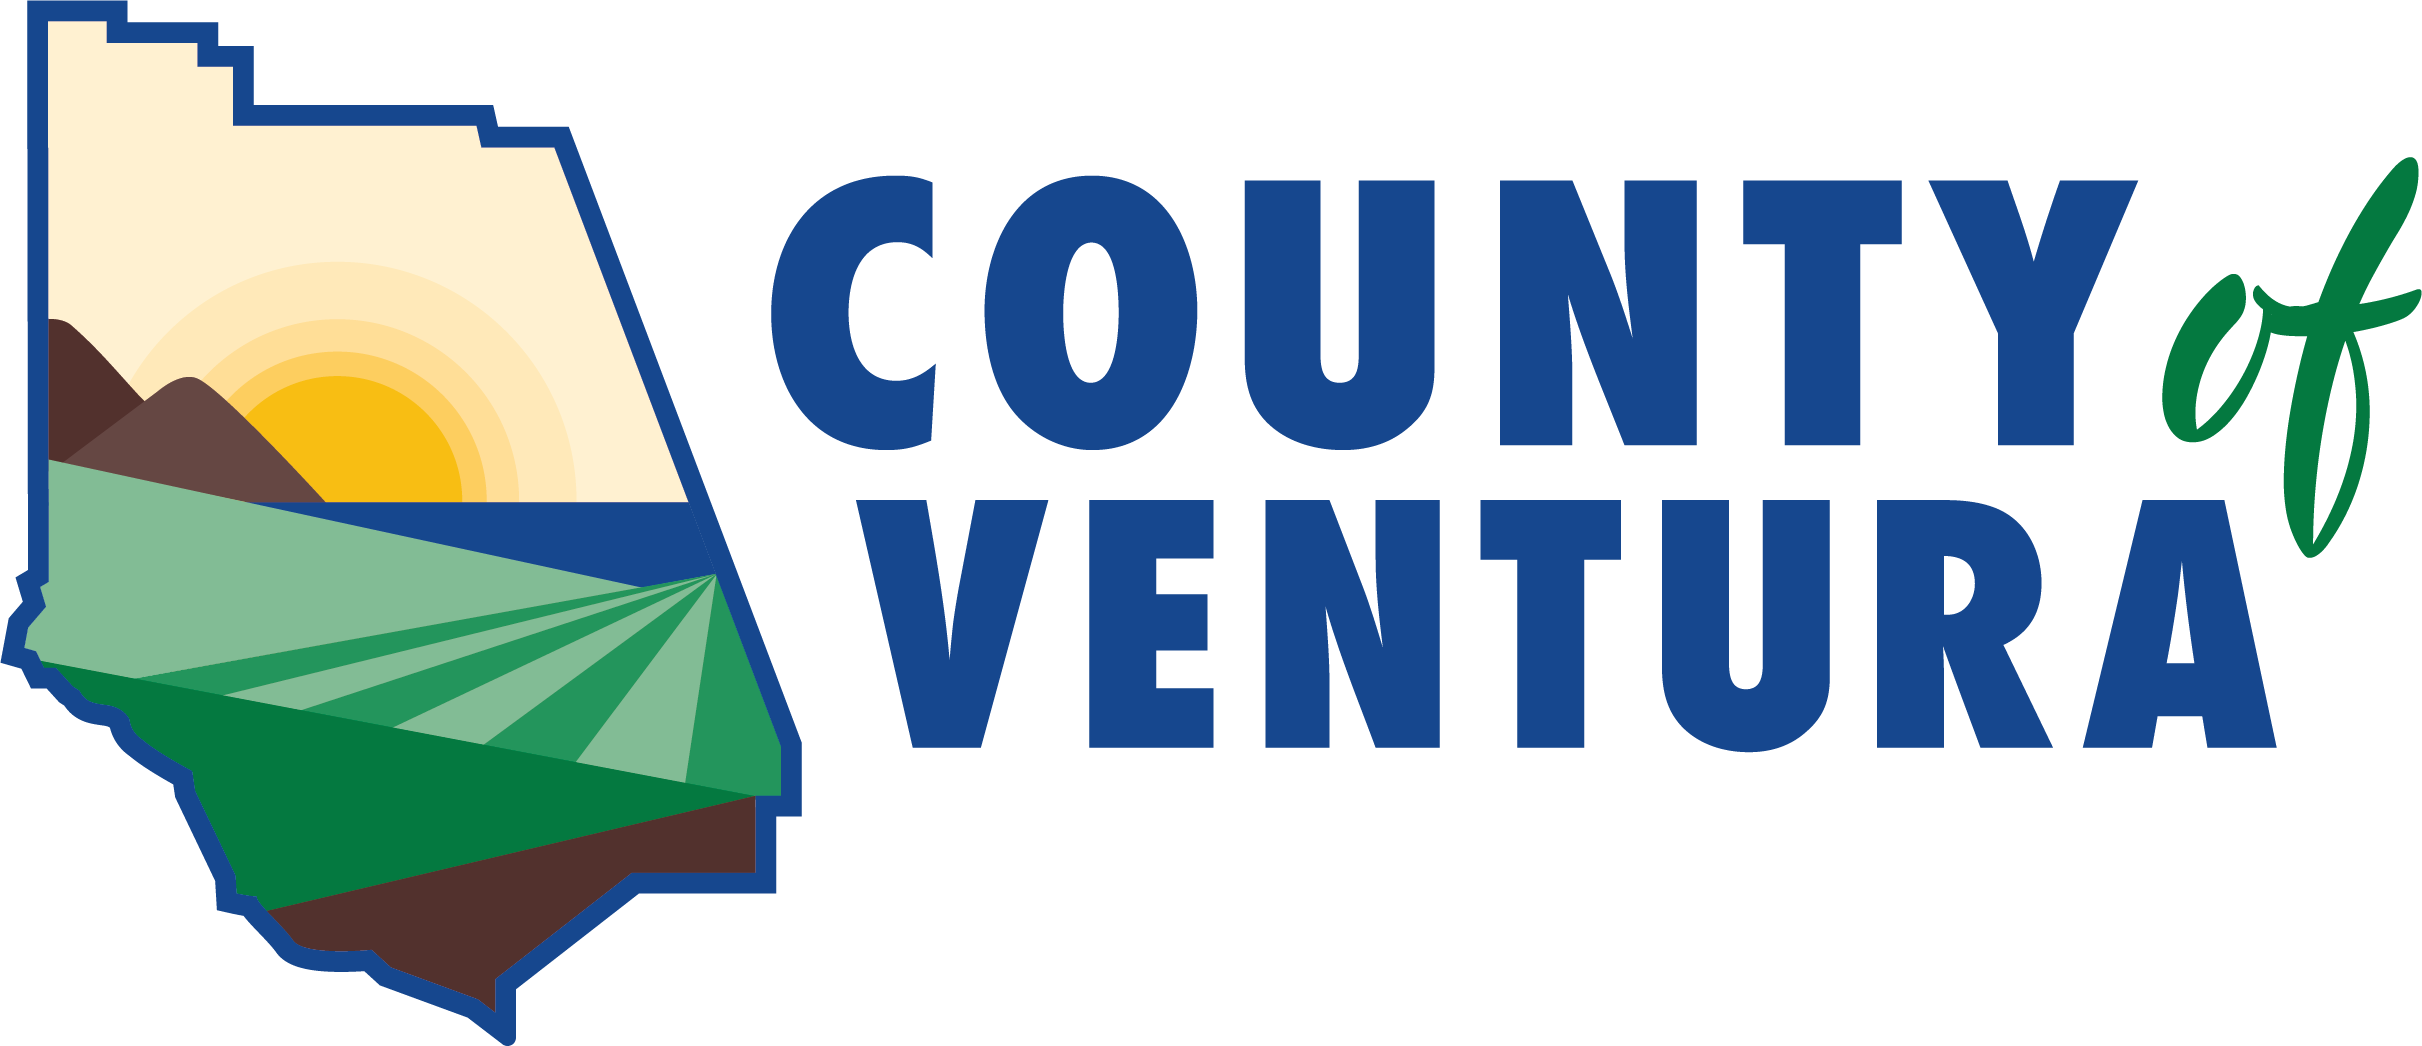 County of ventura